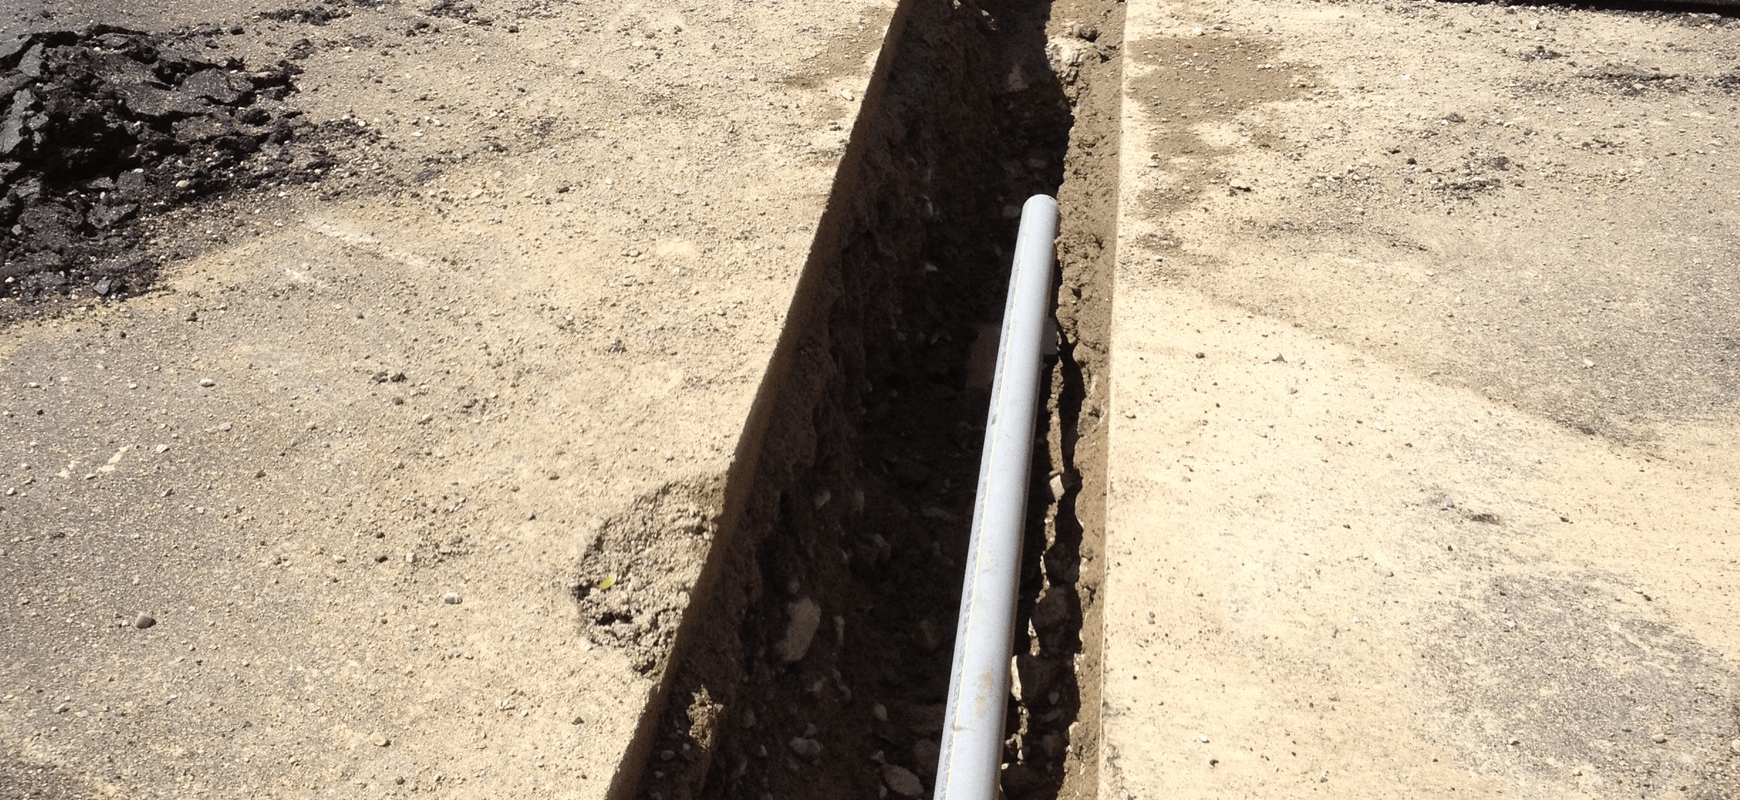 Trenching excavation Bridgeport, CT